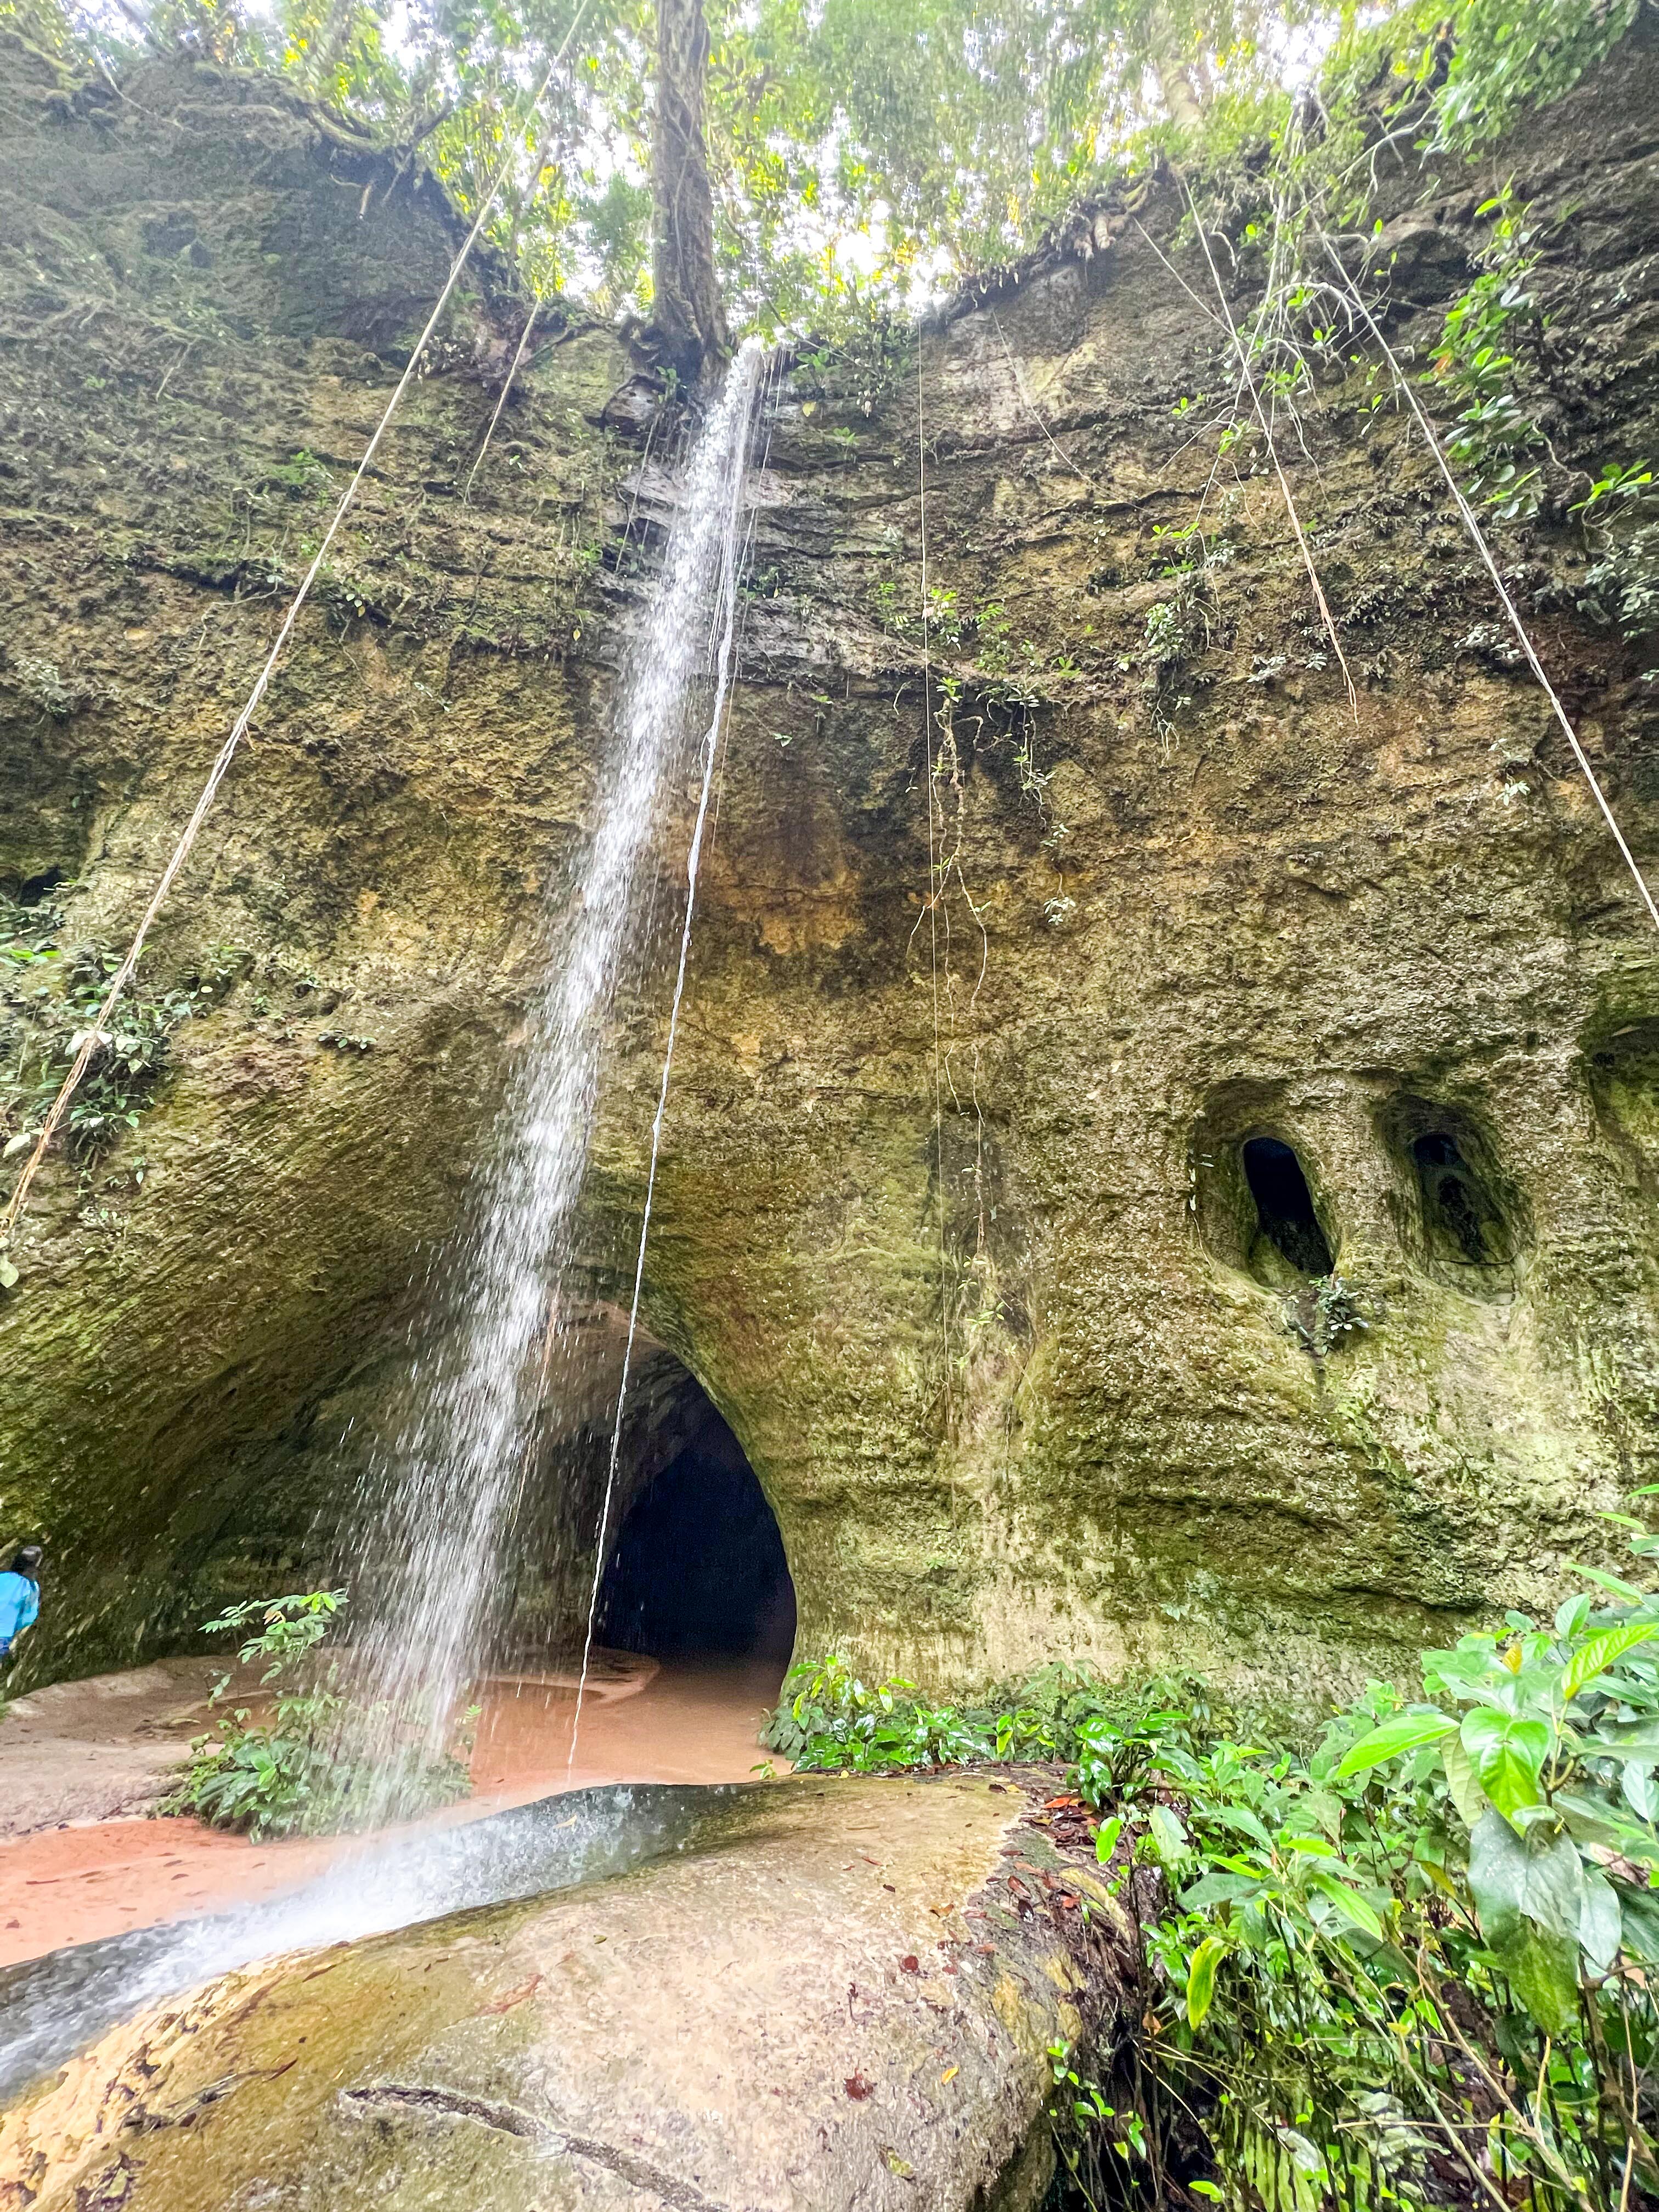 PRESIDENTE FIGUEIREDO: Caverna de Maroaga